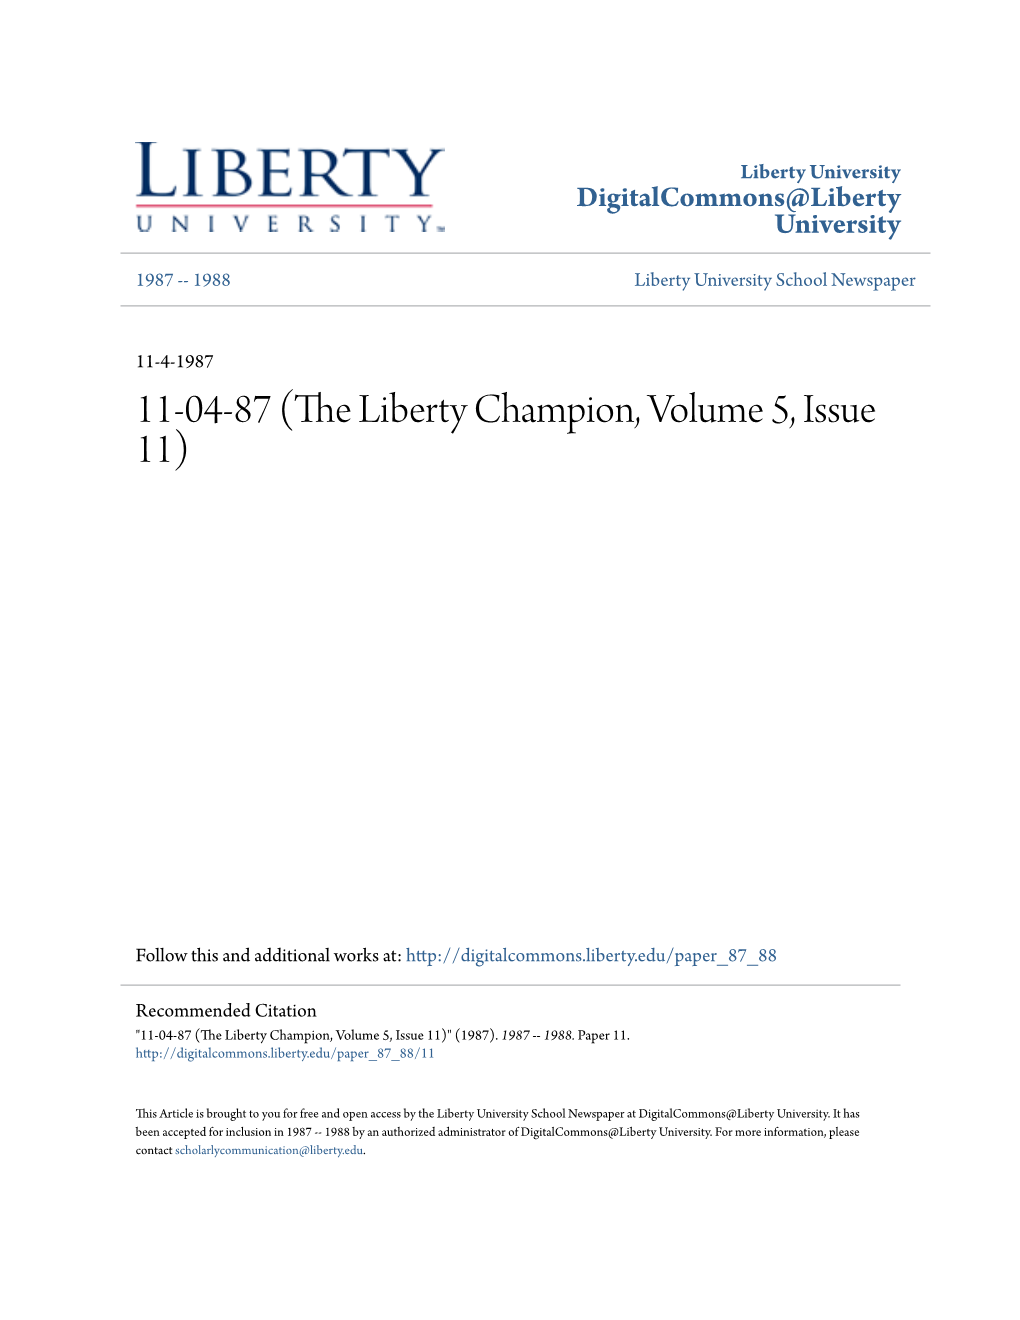 The Liberty Champion, Volume 5, Issue 11)